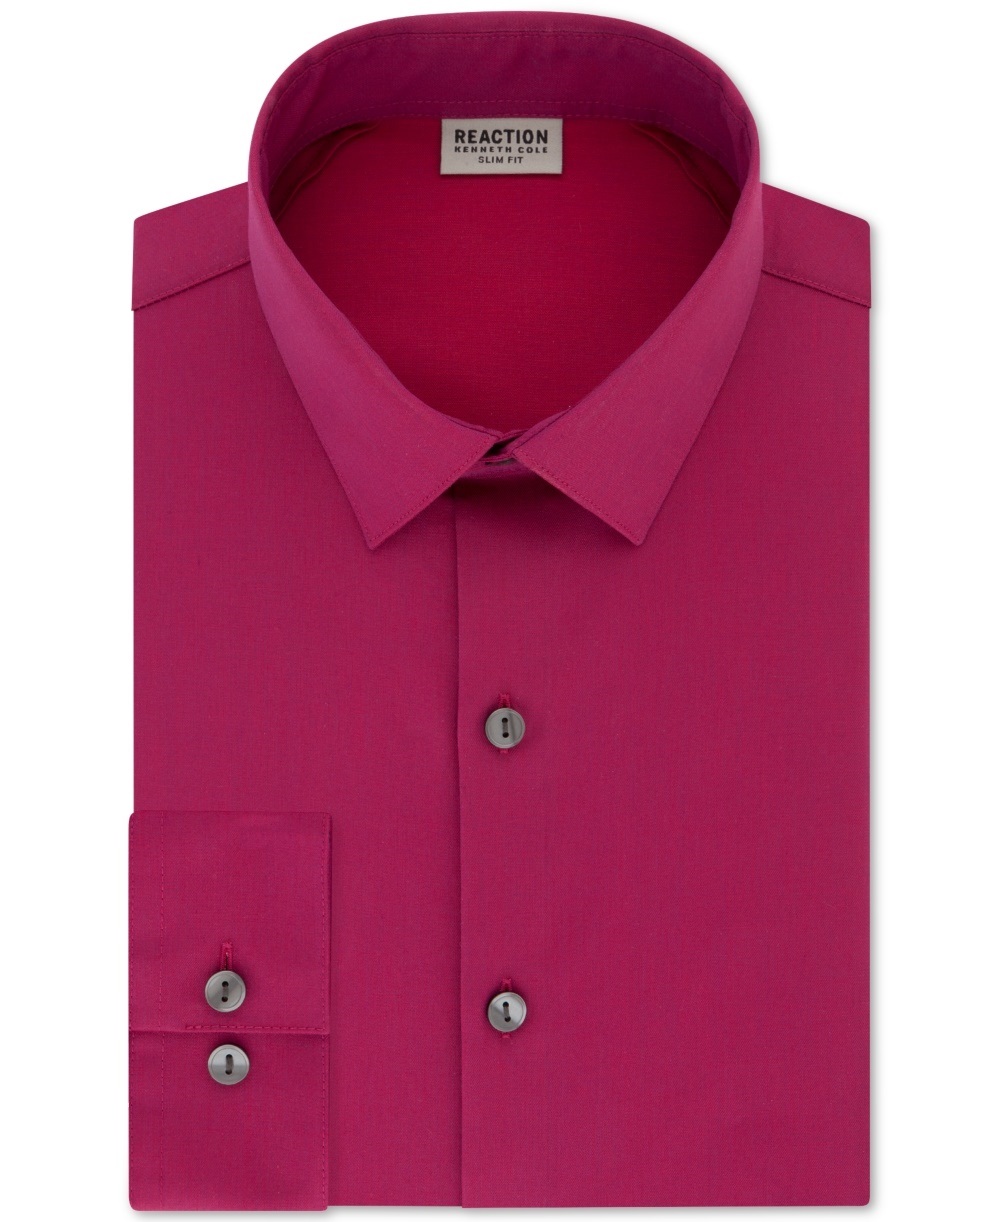 Kenneth Cole Reaction Men's Slim Fit Dress Shirt Pink Size 16.5X32X33